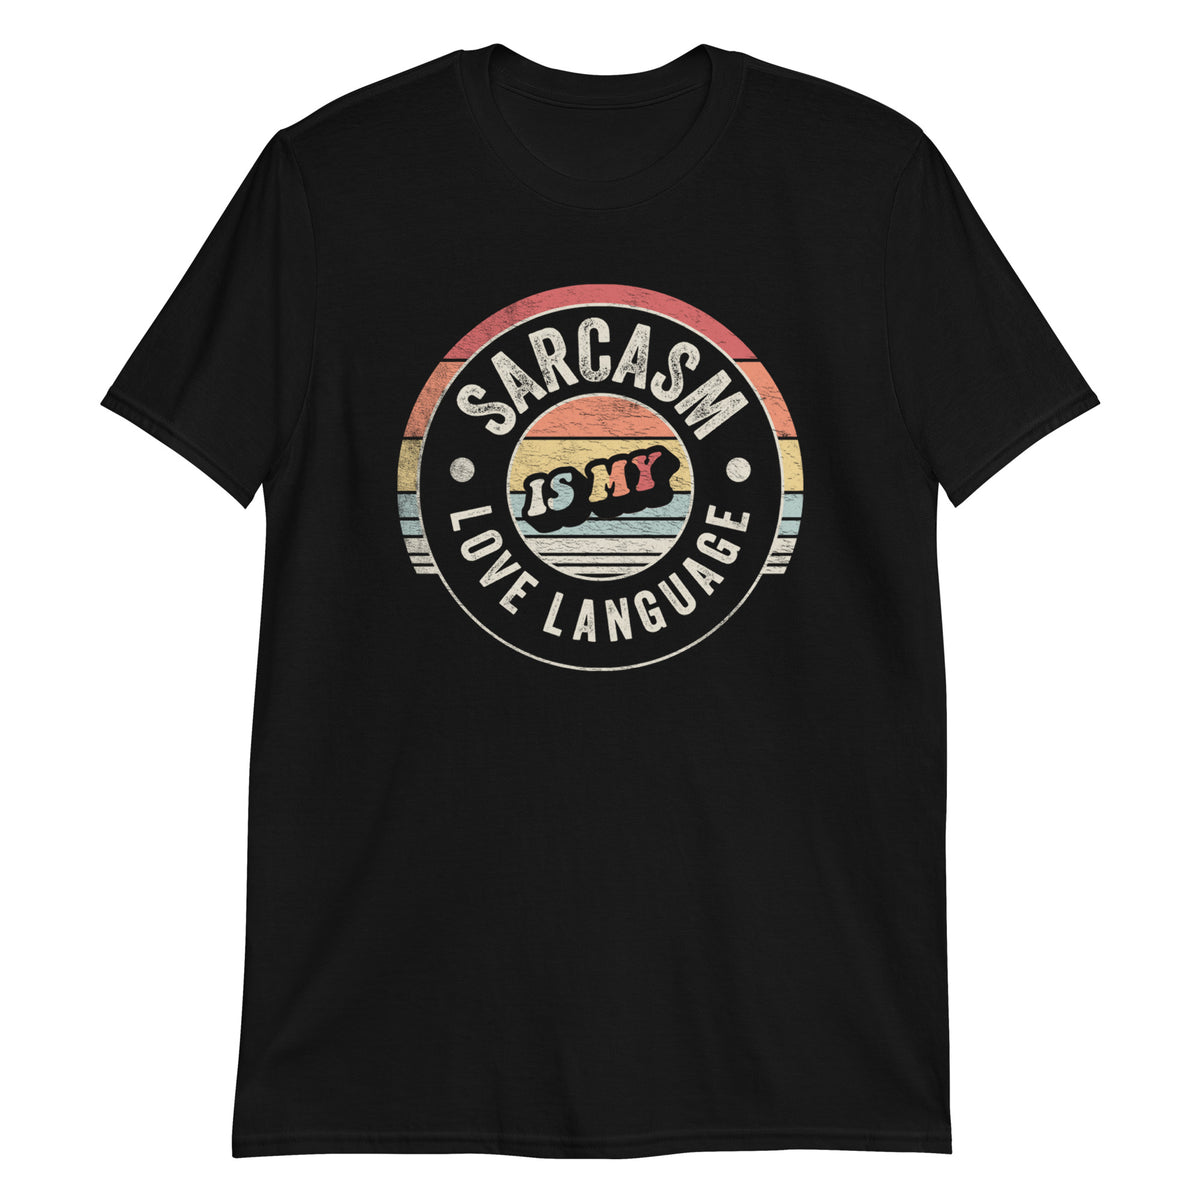 Sarcasm is My Love Language T-Shirt